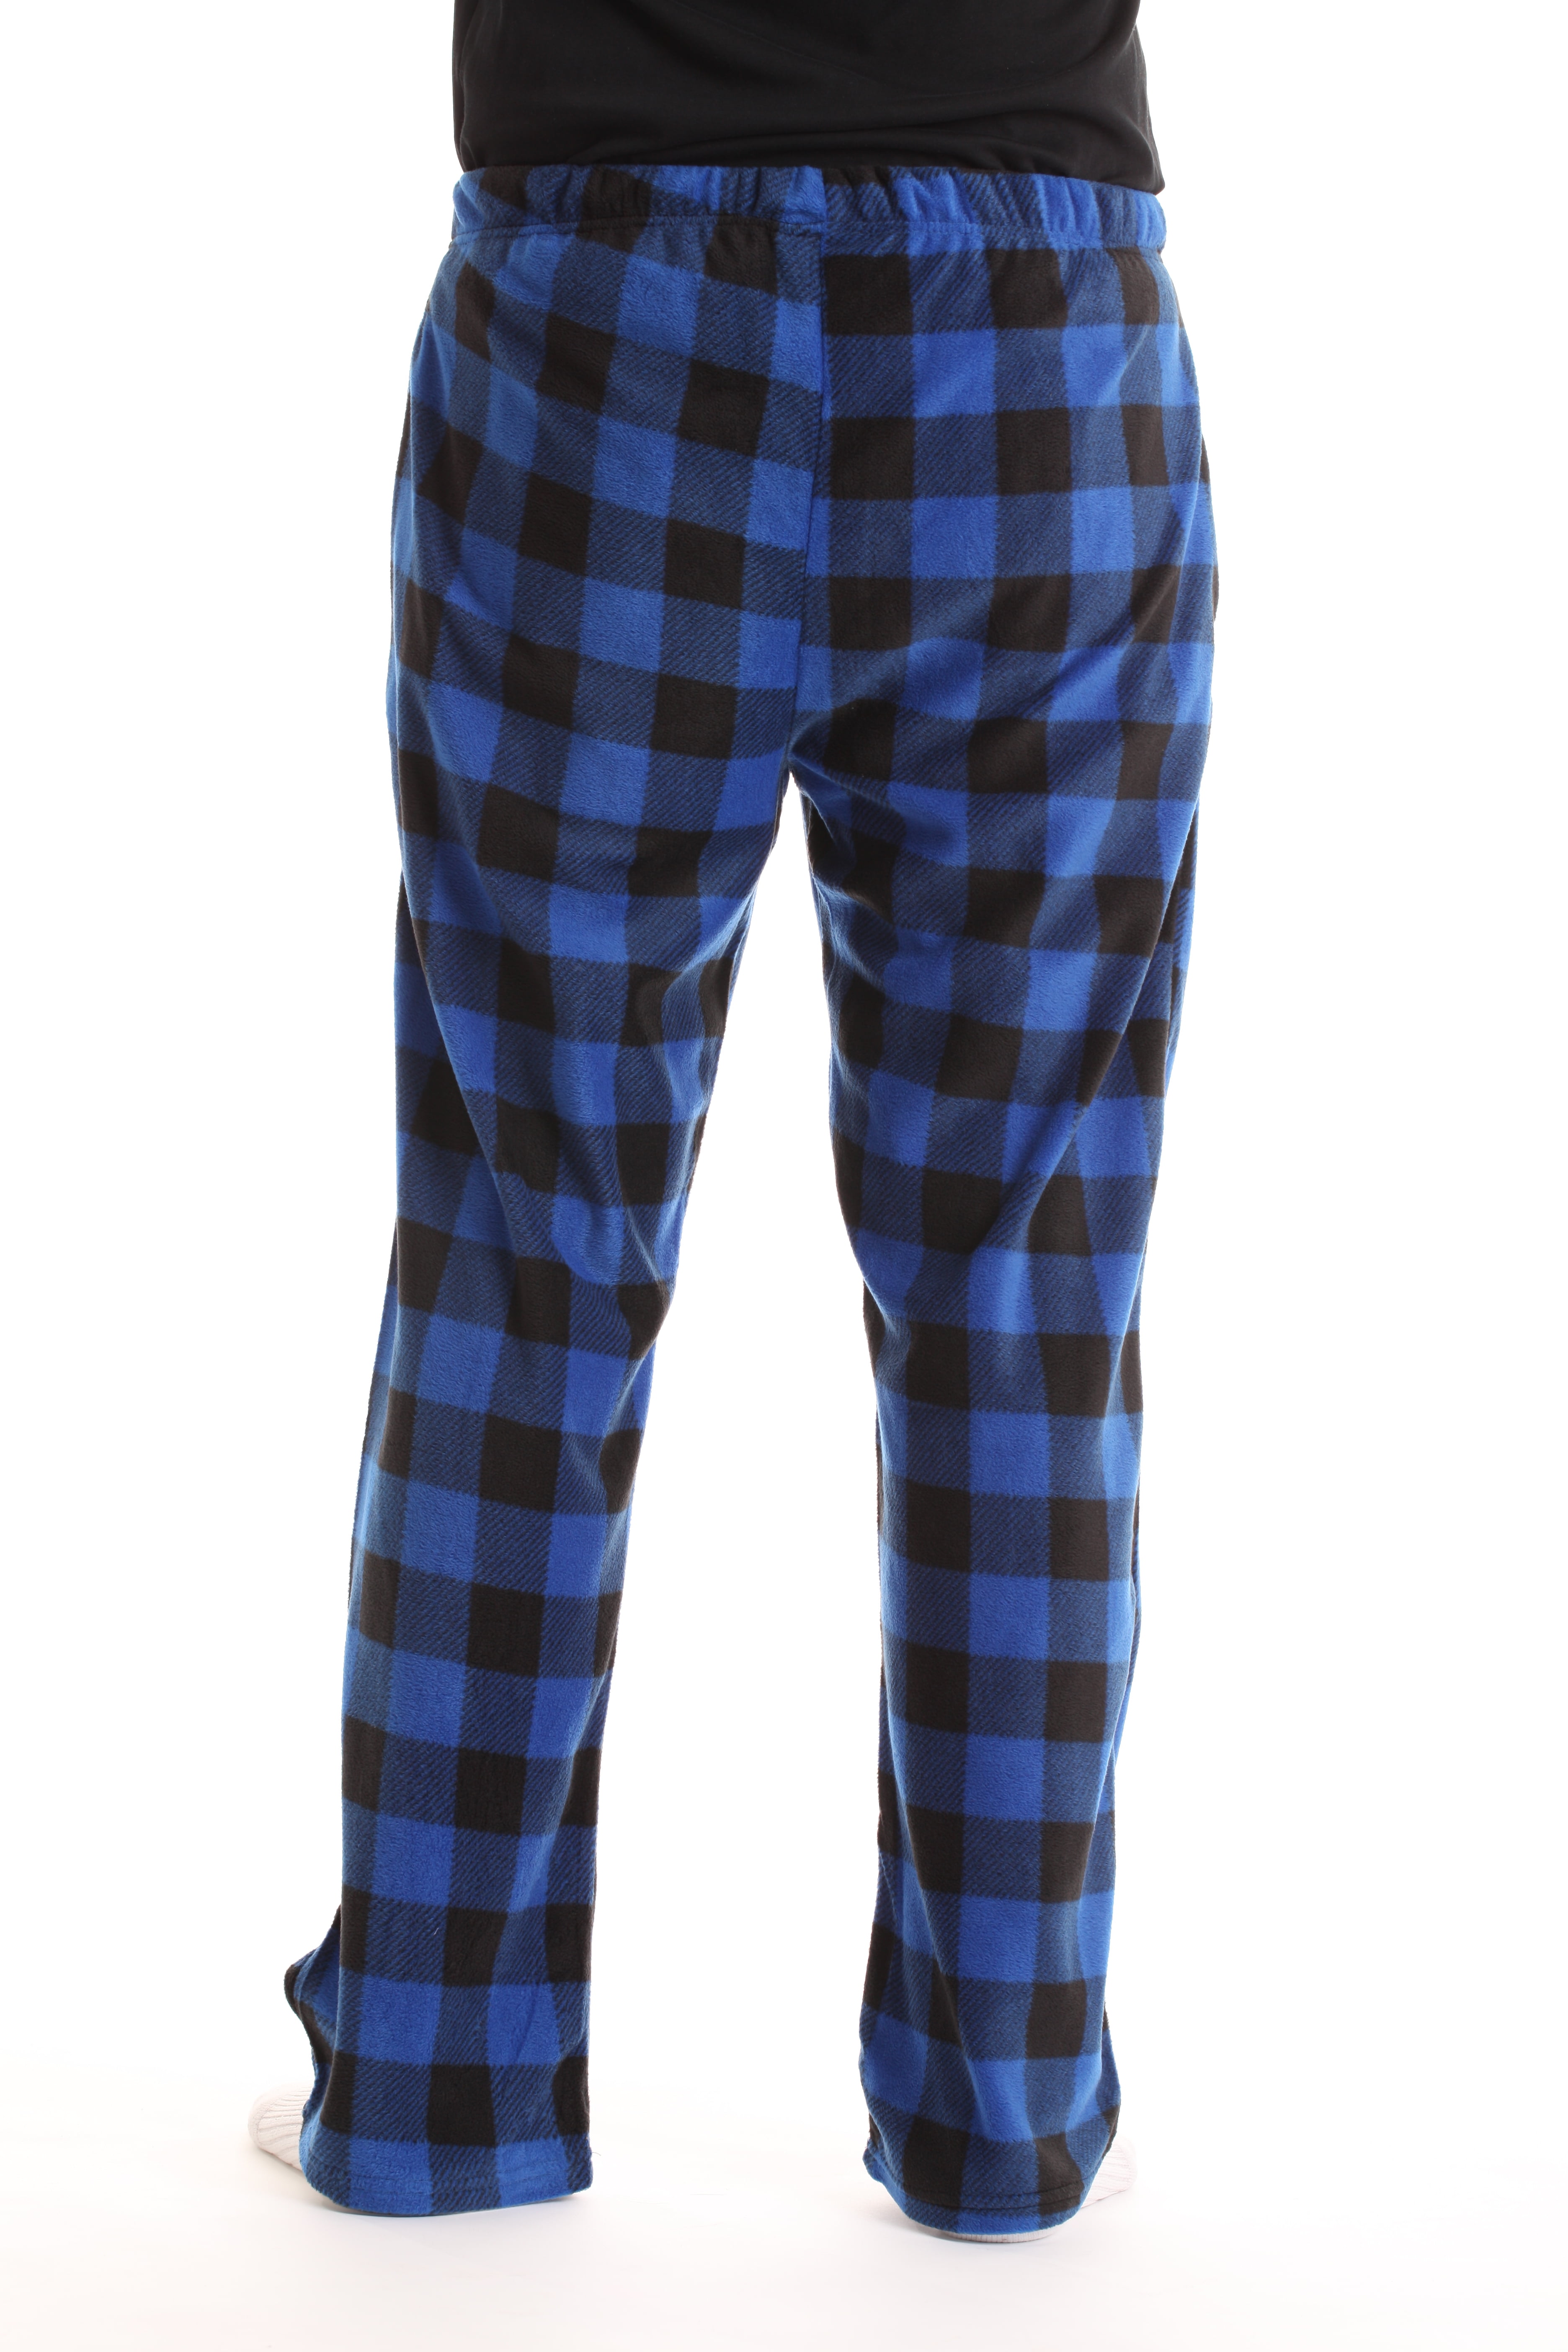 followme Microfleece Men's Buffalo Plaid Pajama Pants with Pockets (Grey  Buffalo Plaid, Small) 